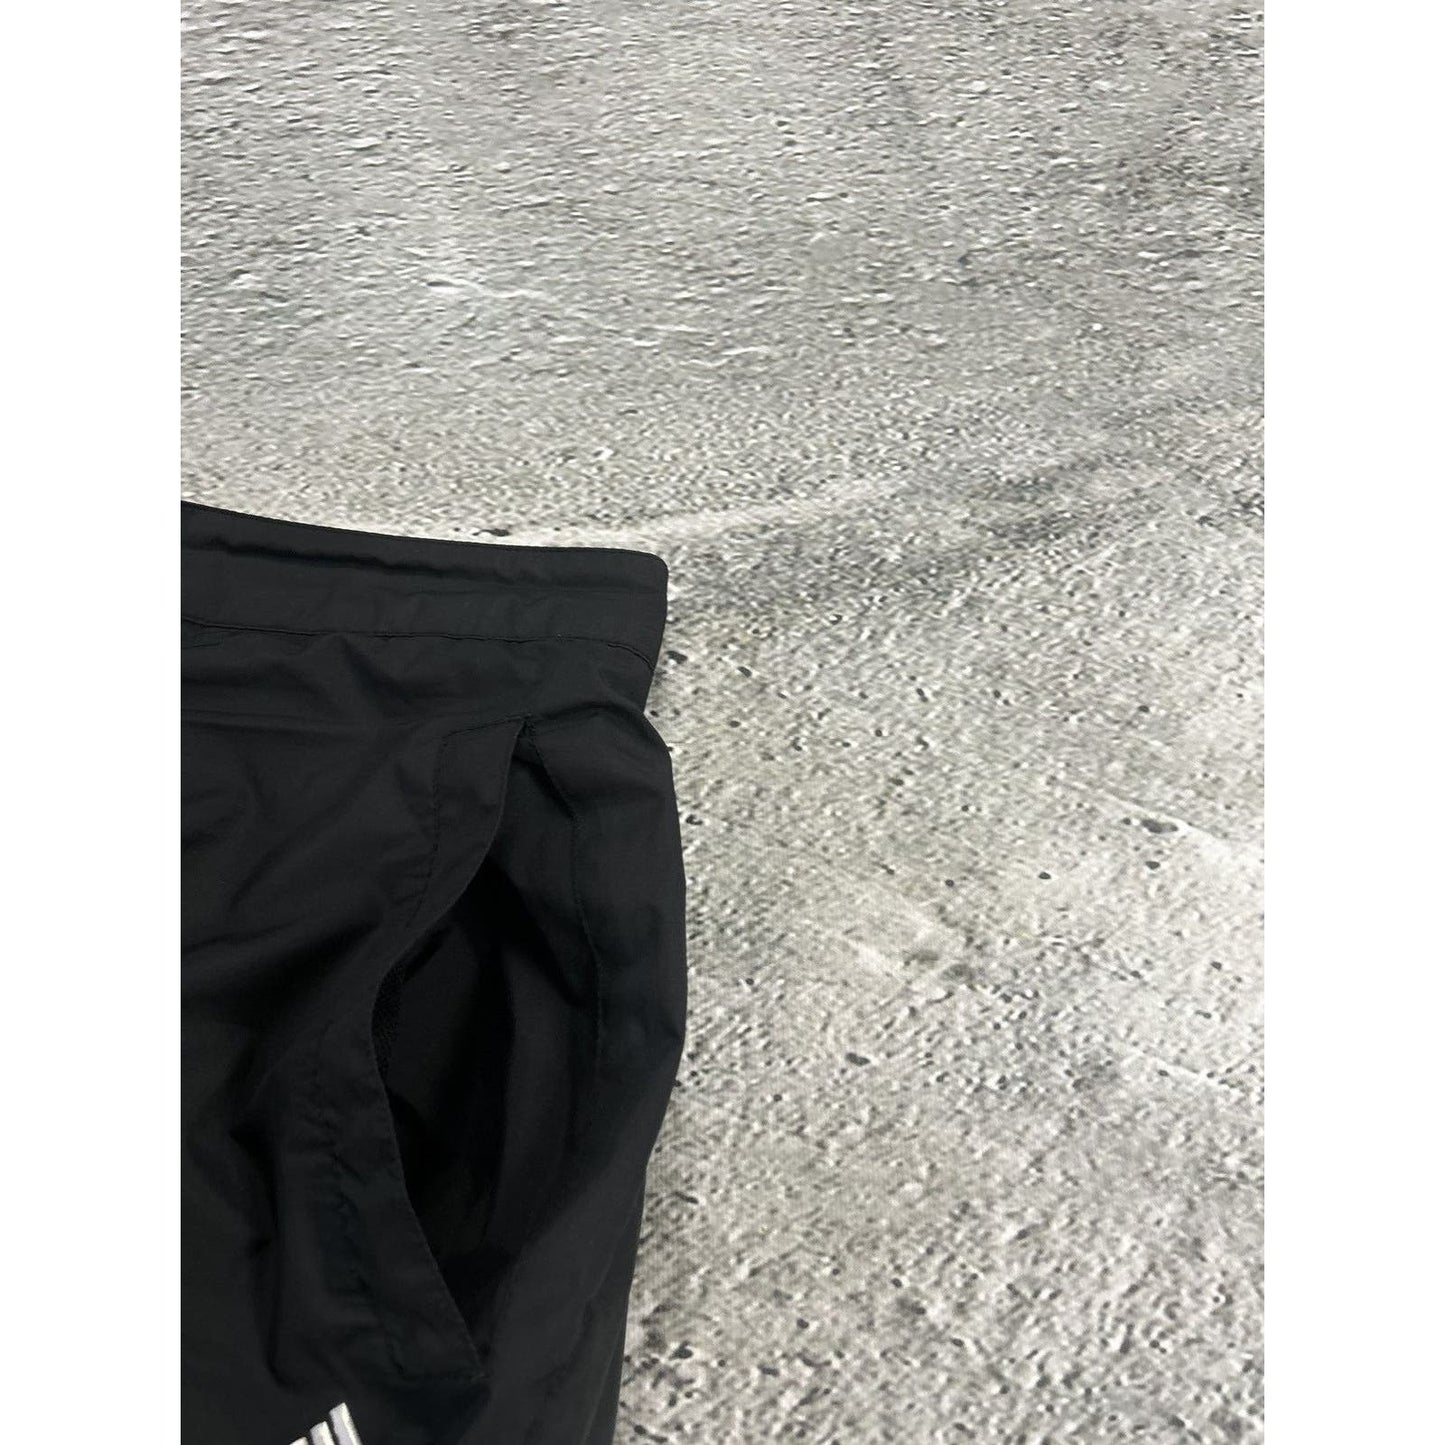 Adidas vintage black nylon track pants small logo 2000s